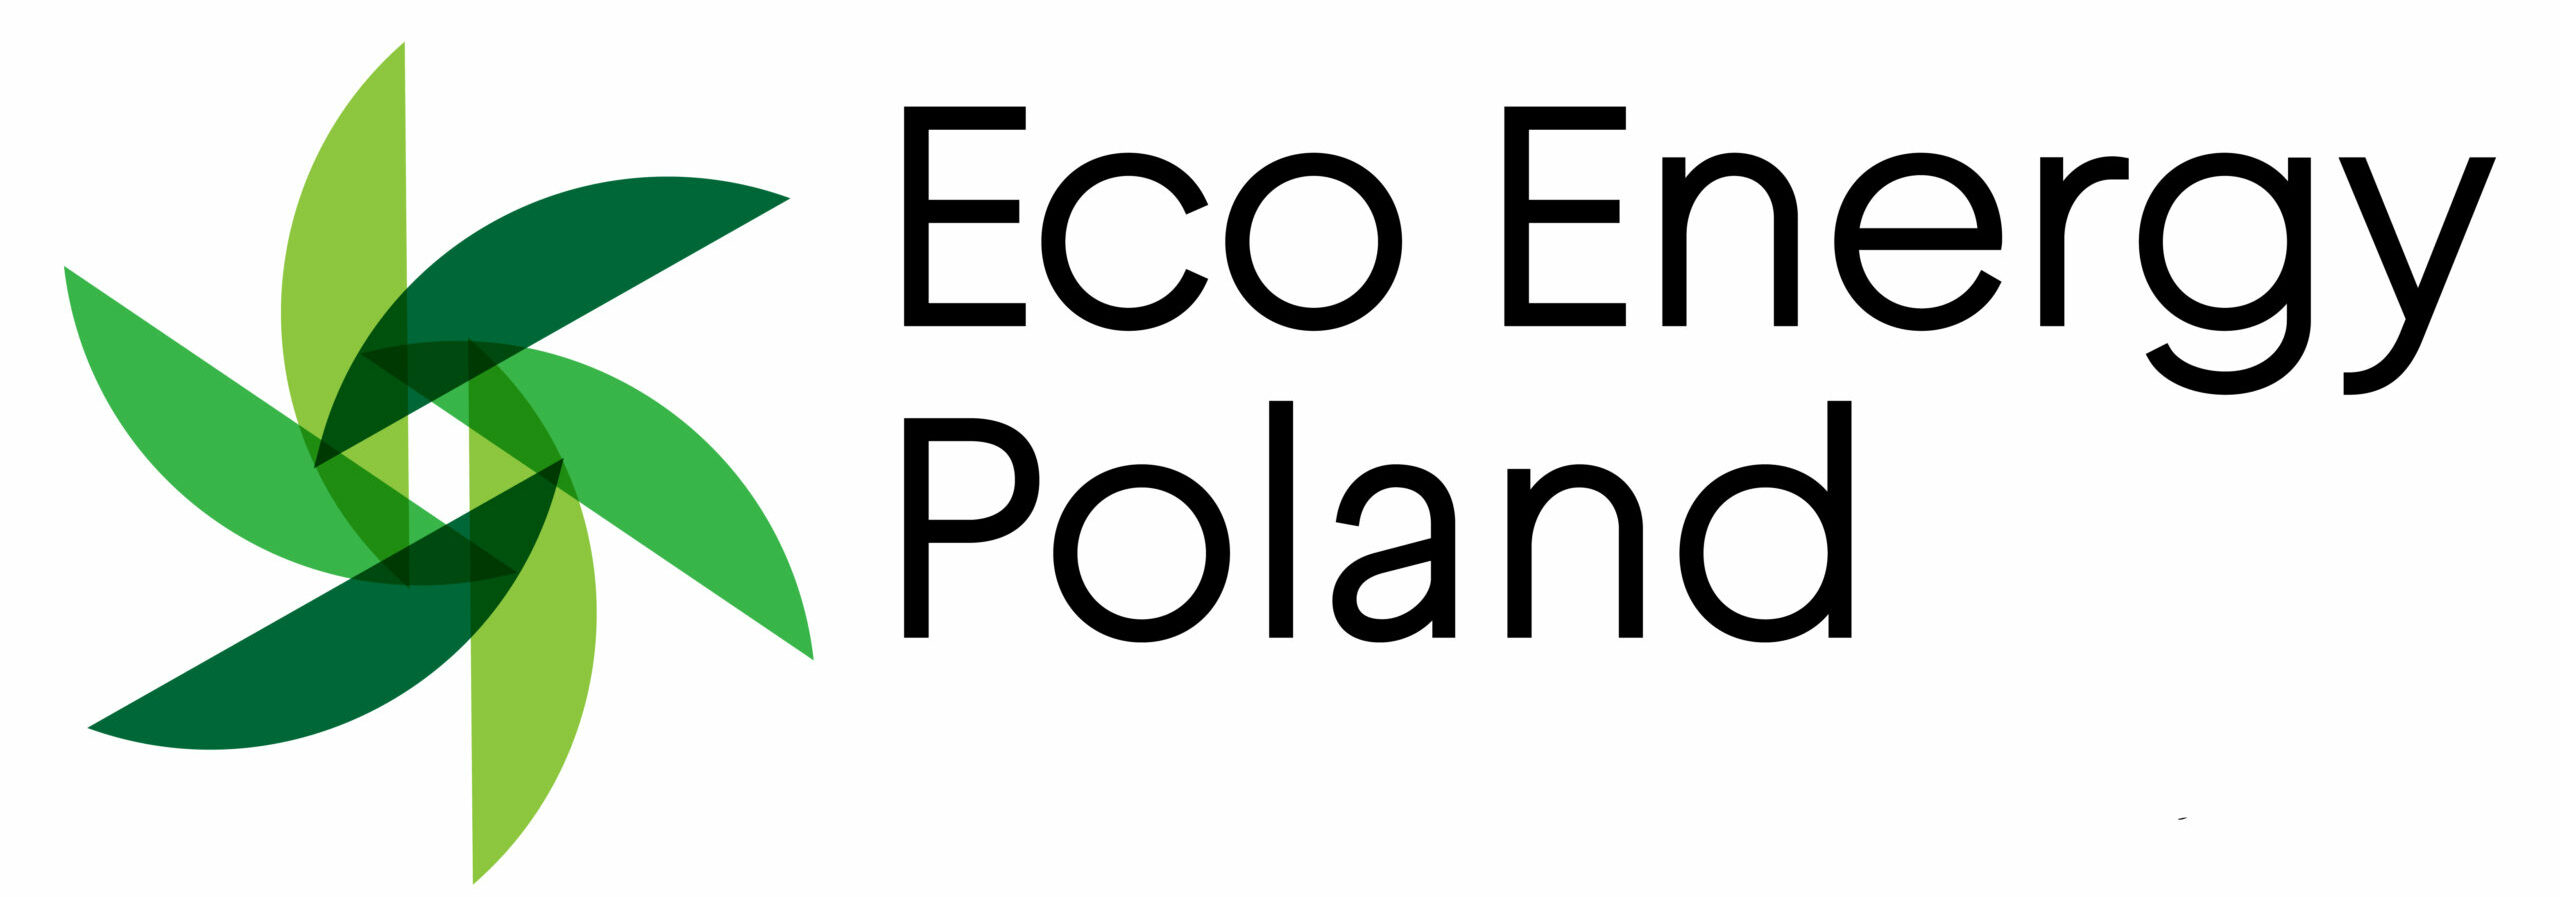 Eco Energy Poland